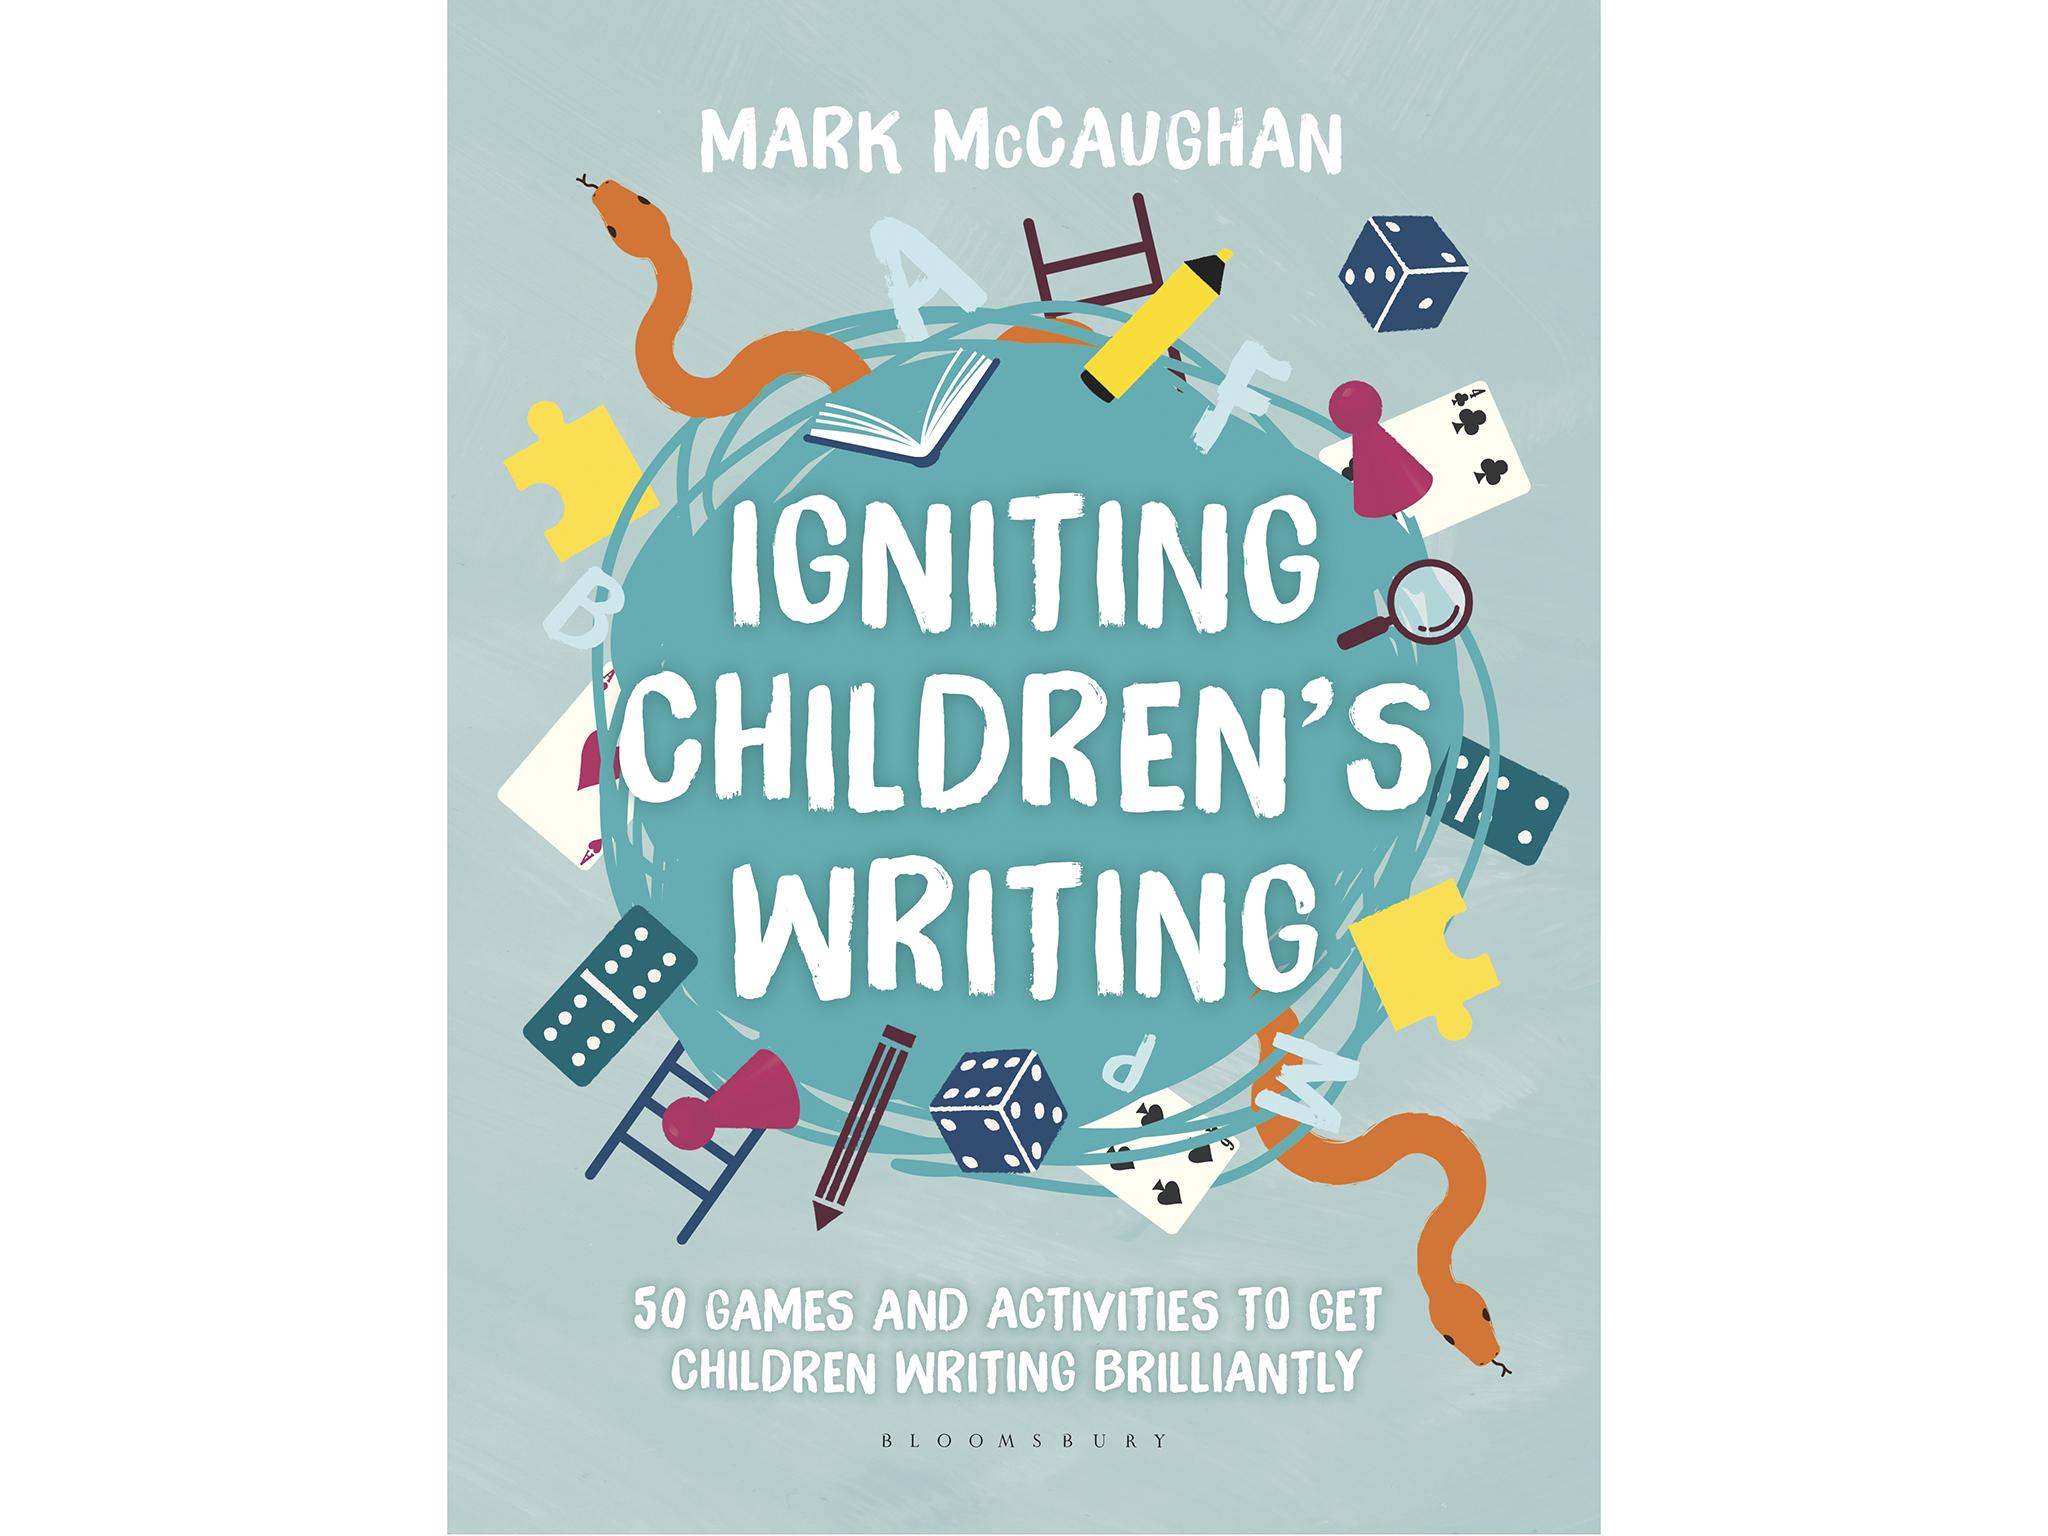 igniting-children-writing-homeschooling-books-indybest.jpg